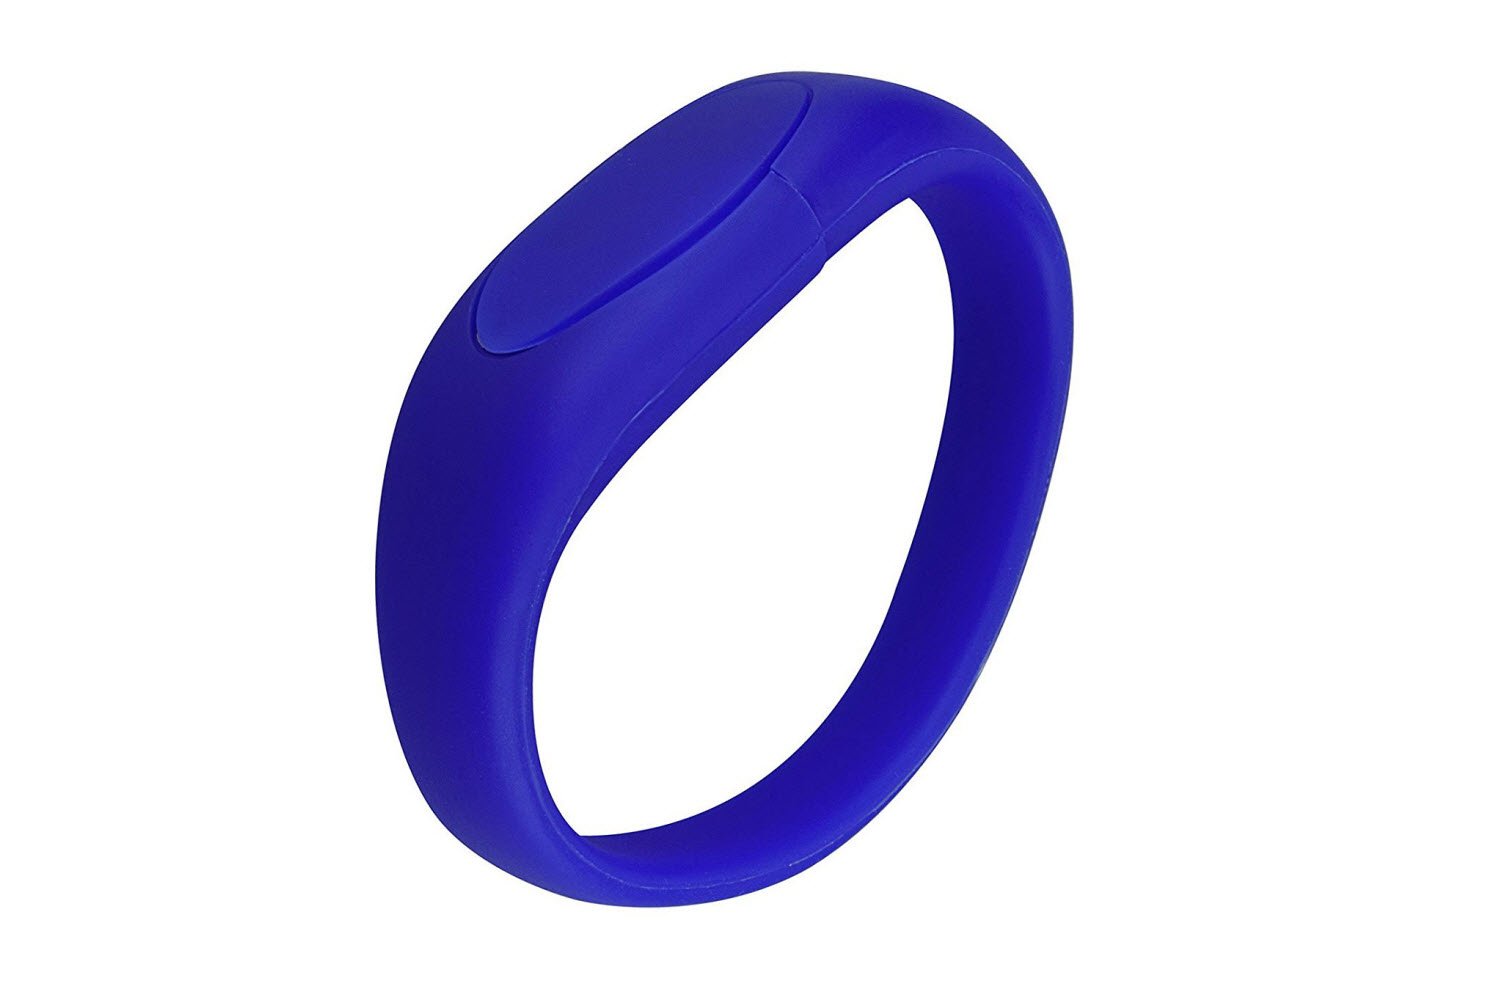 KOOTION 16GB Wristband USB 2.0 Flash Drive - Blue